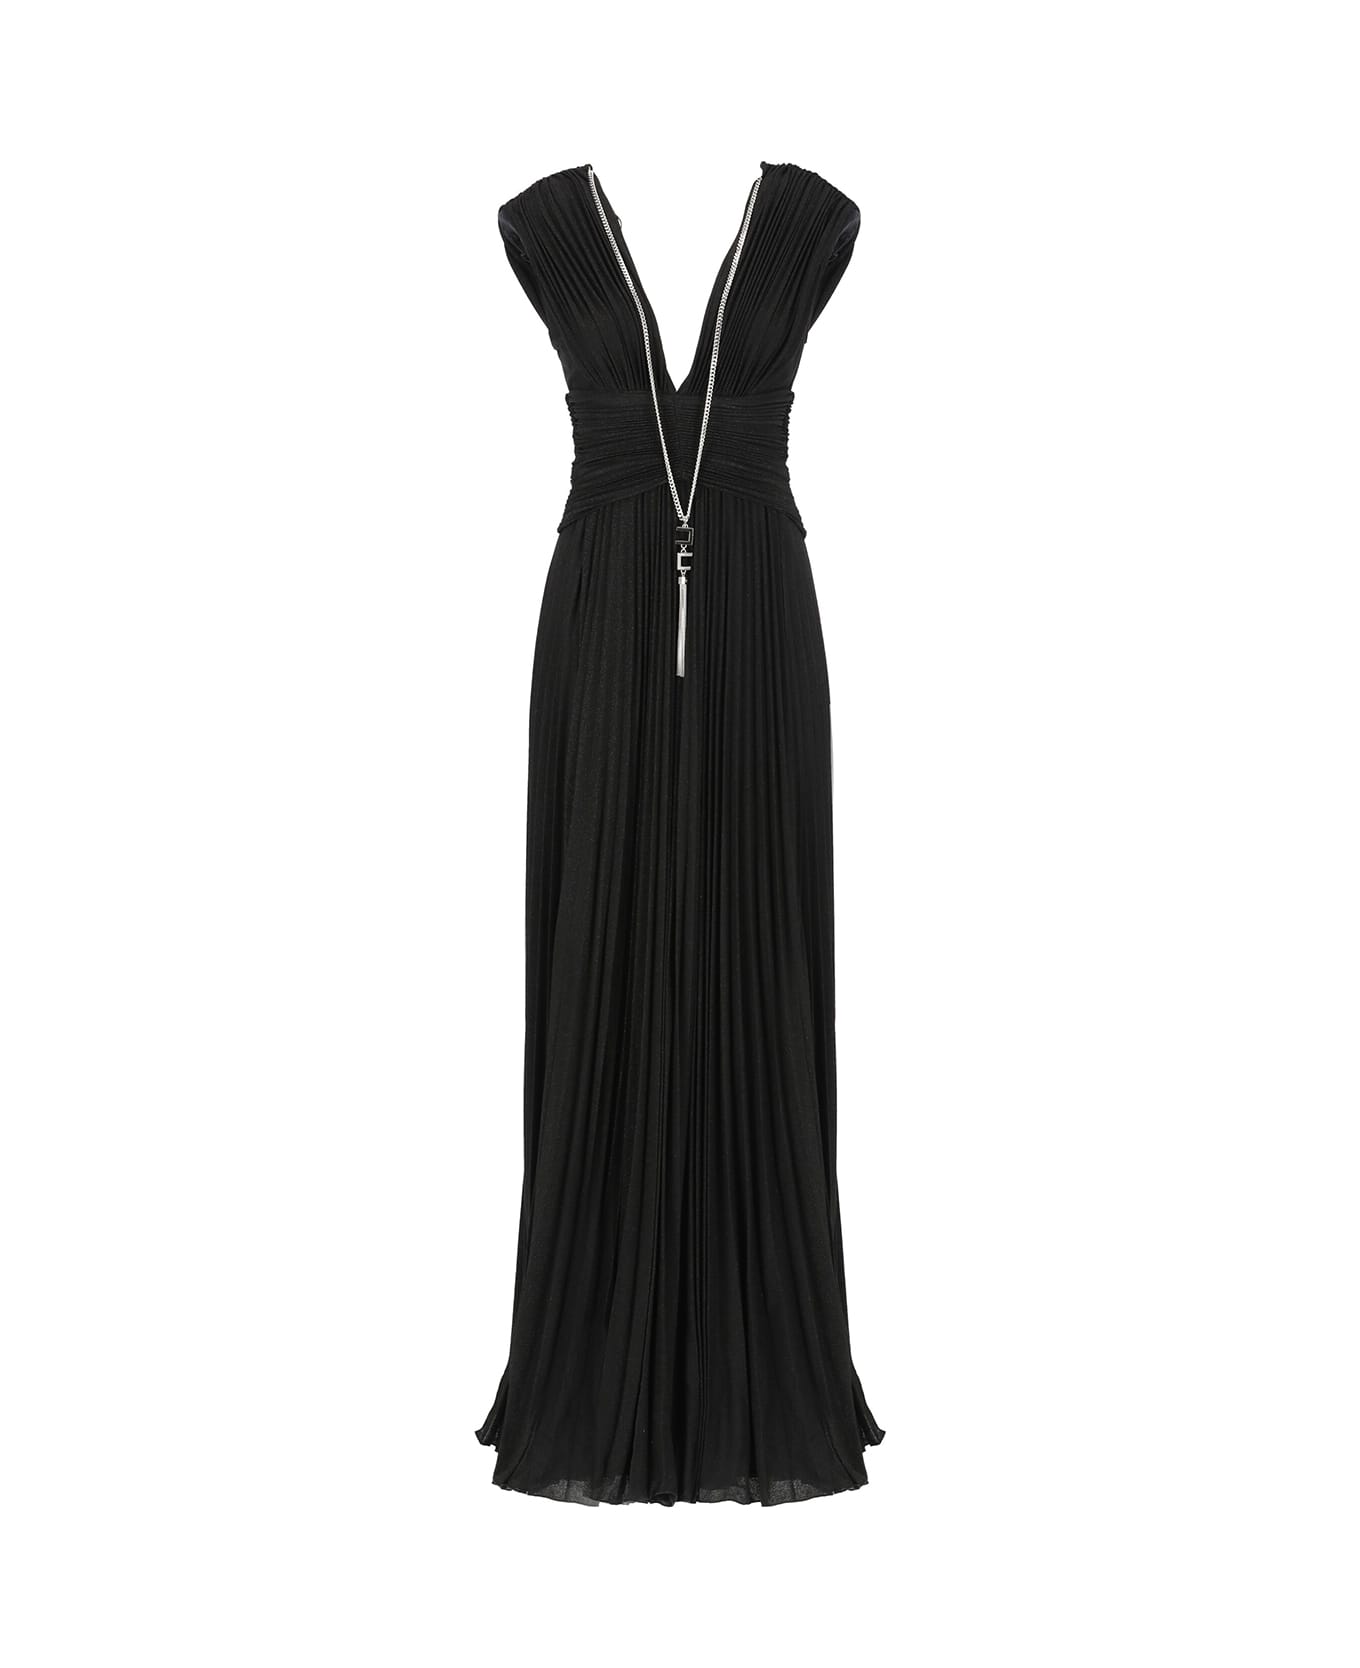 Elisabetta Franchi Red Carpet Lurex Jersey Dress With Necklace - Black